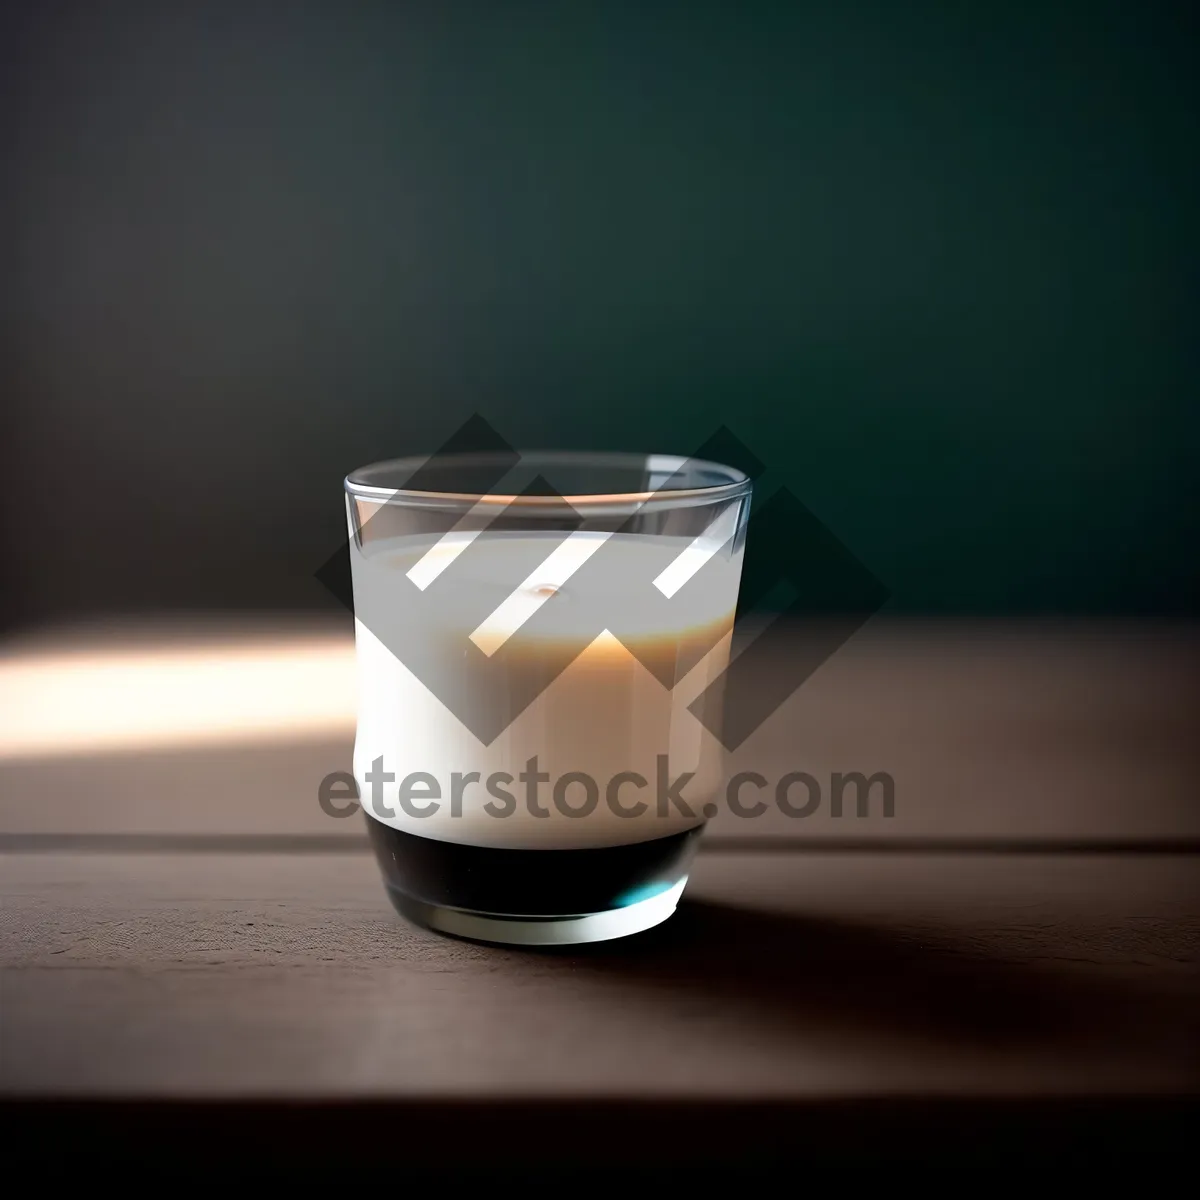 Picture of Creamy Eggnog Refreshment in Glass